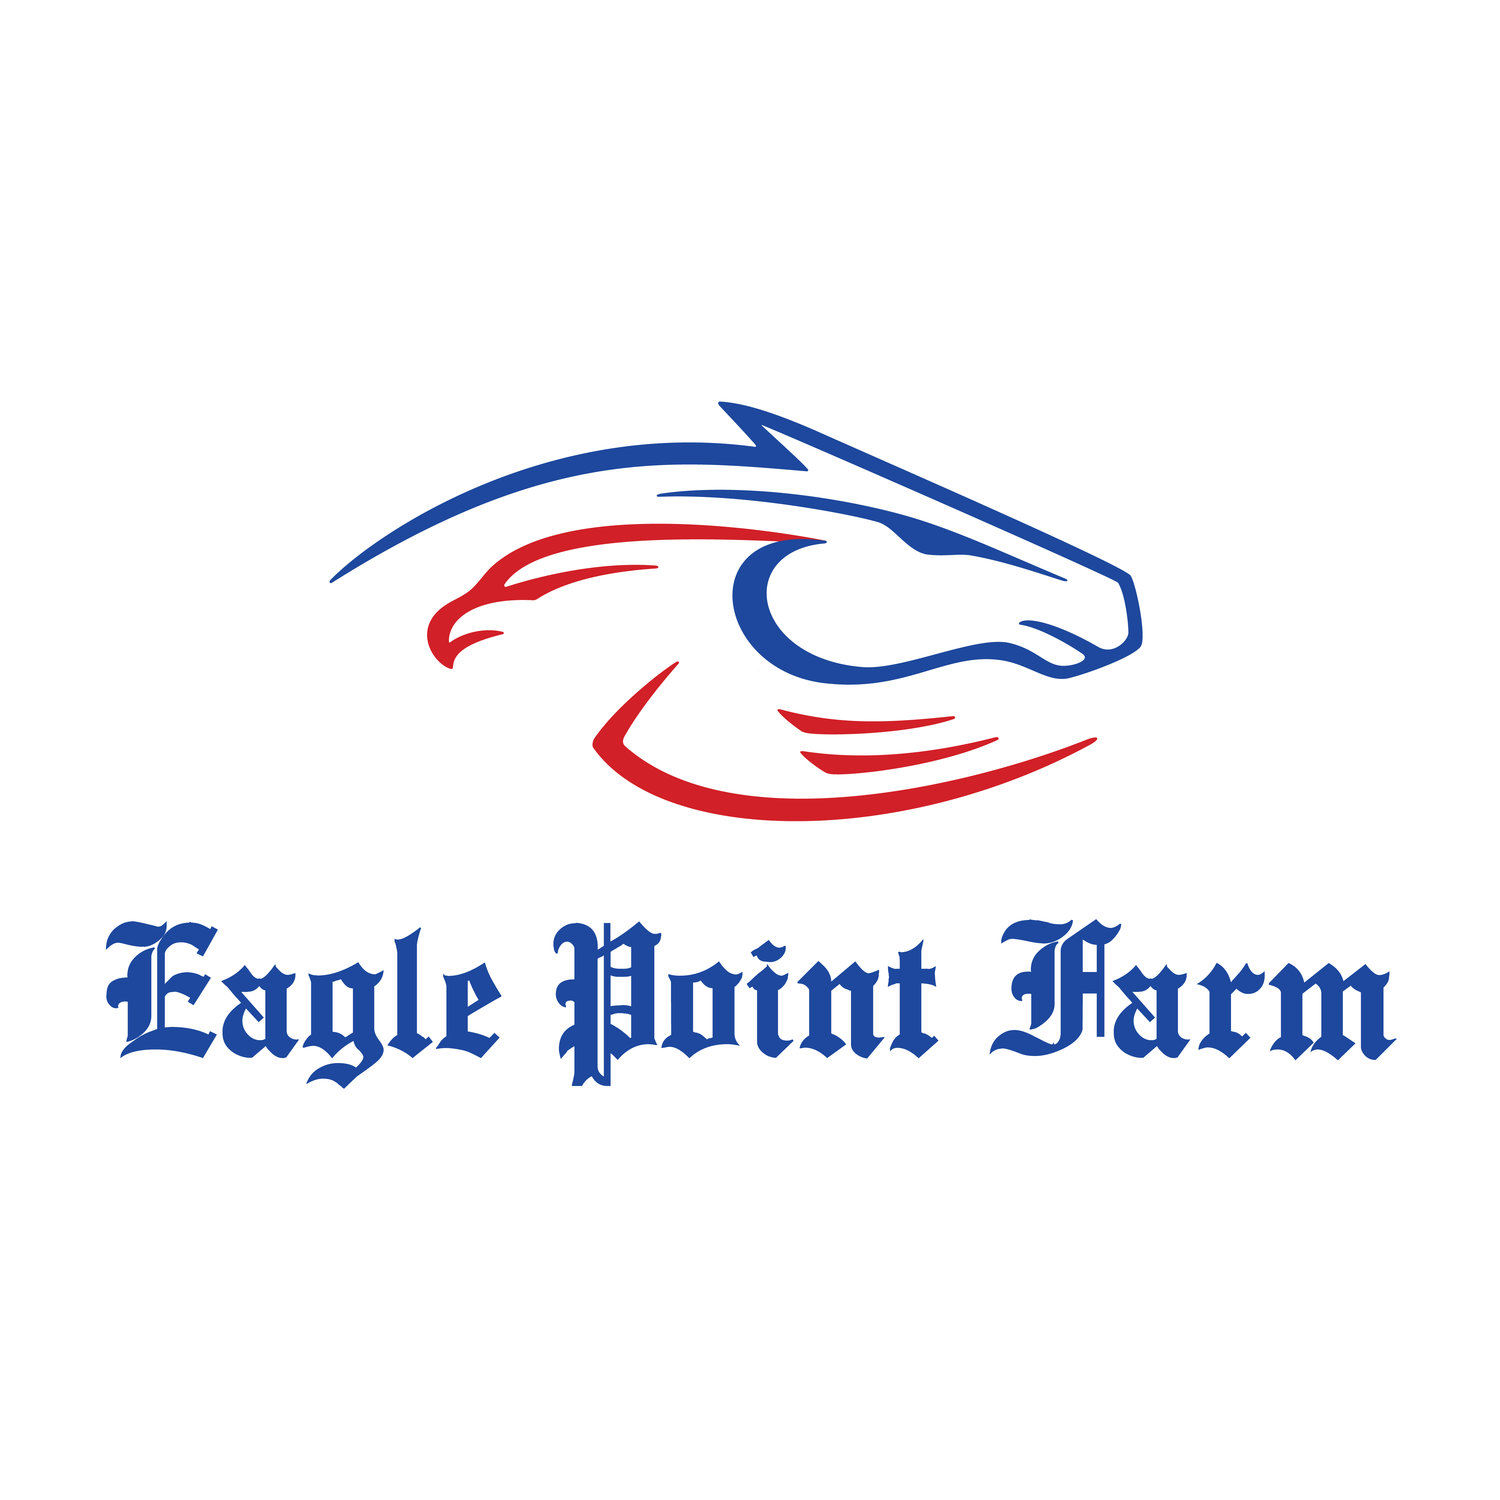 Eagle Point Farm